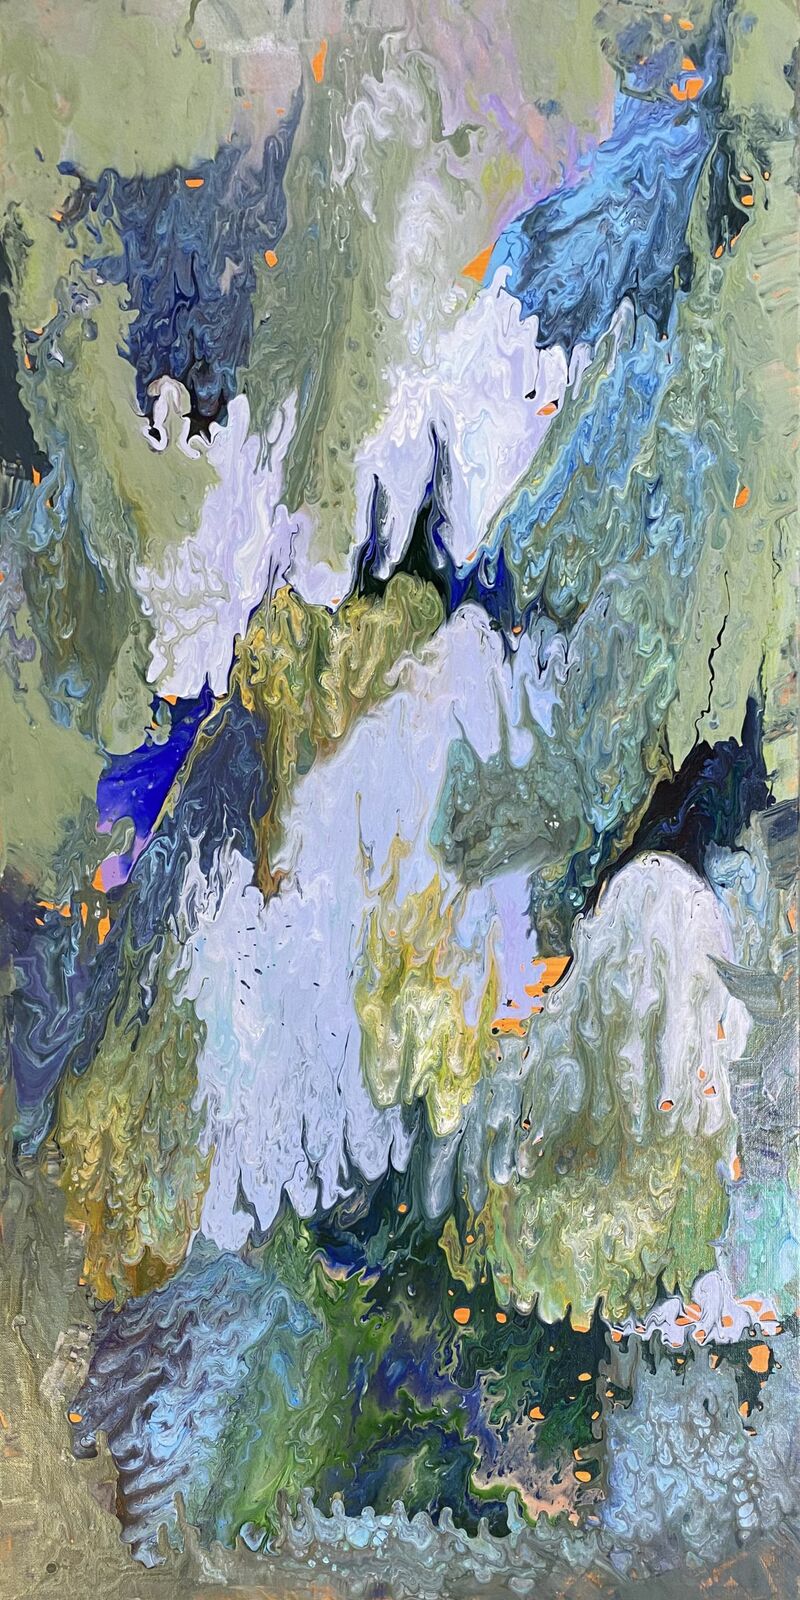 Mount-Needle - a Paint by Jiacheng Wang